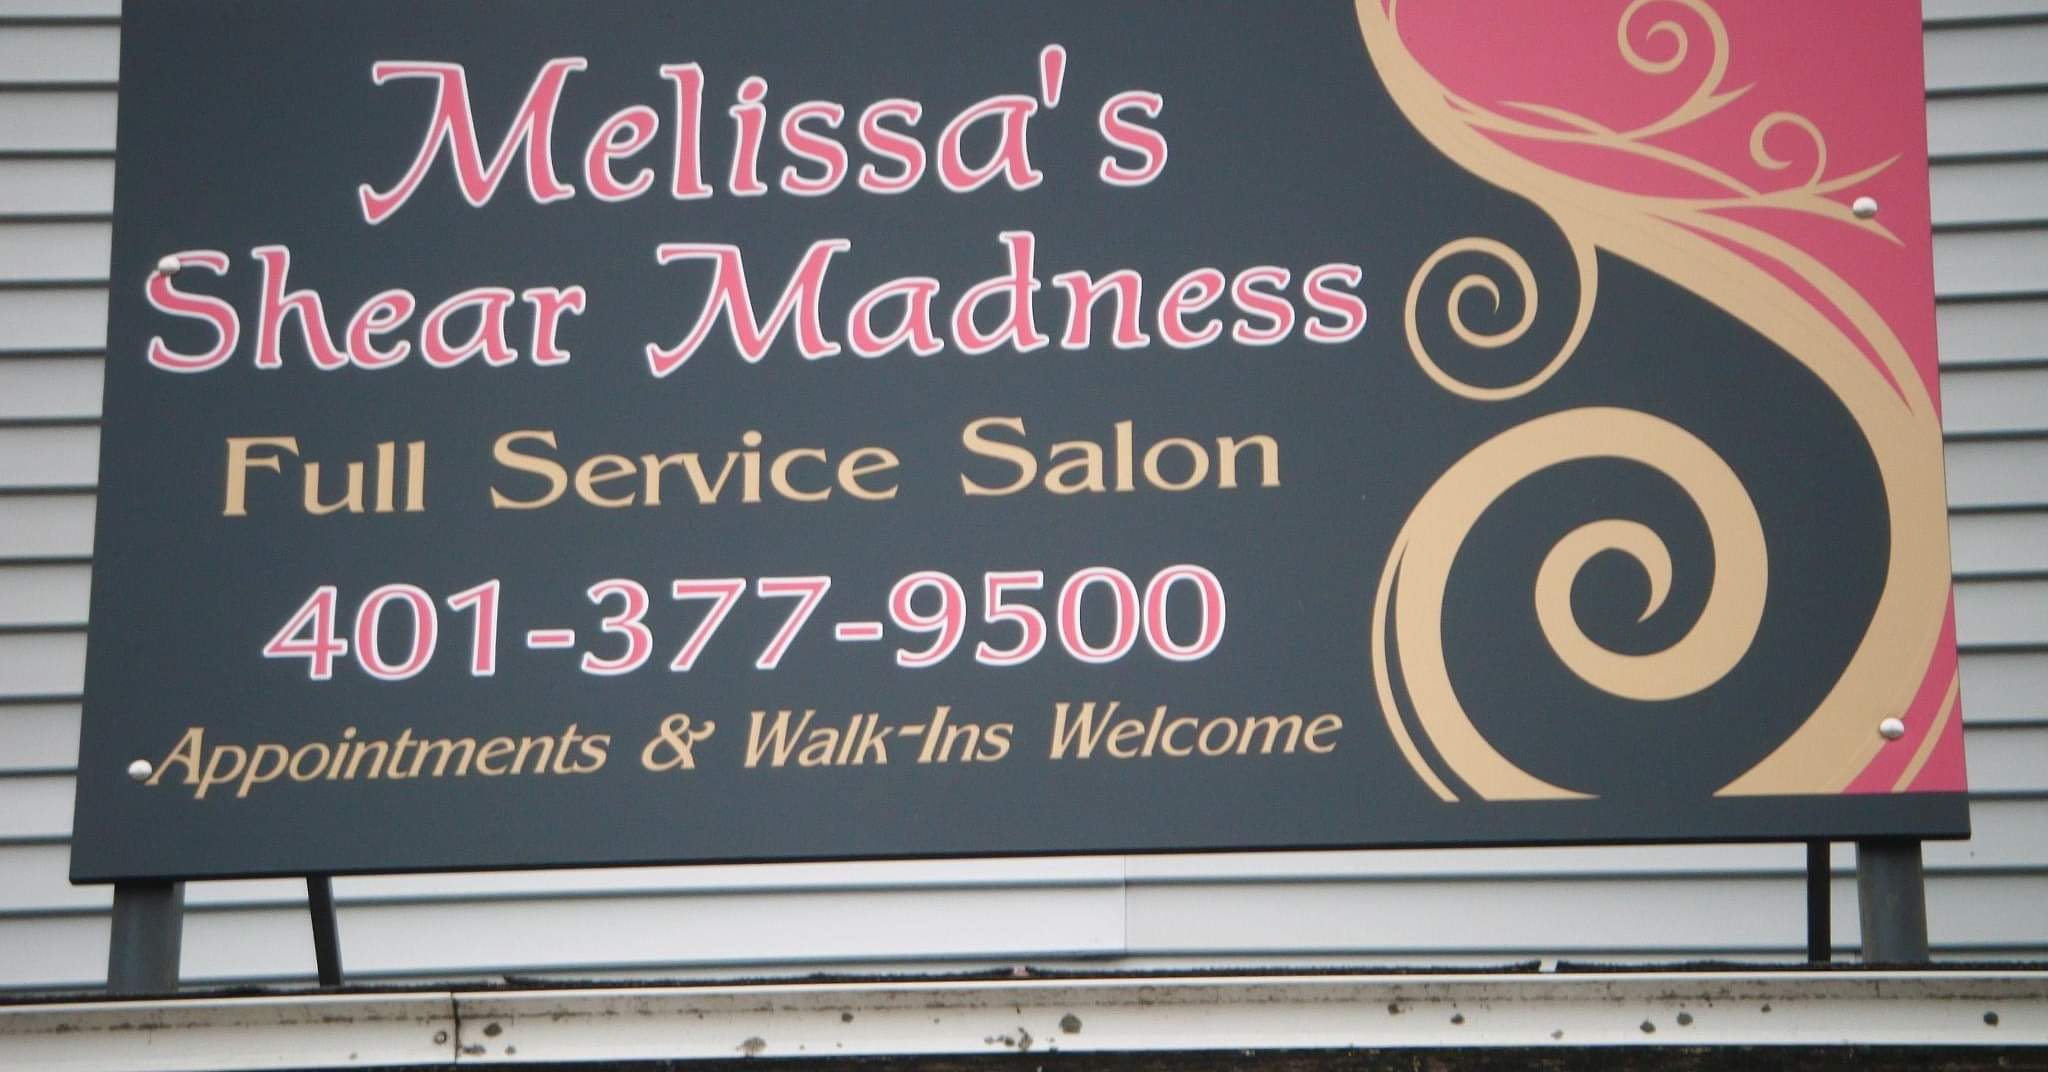 Melissa's Shear Madness 211 Main St, Ashaway Rhode Island 02804